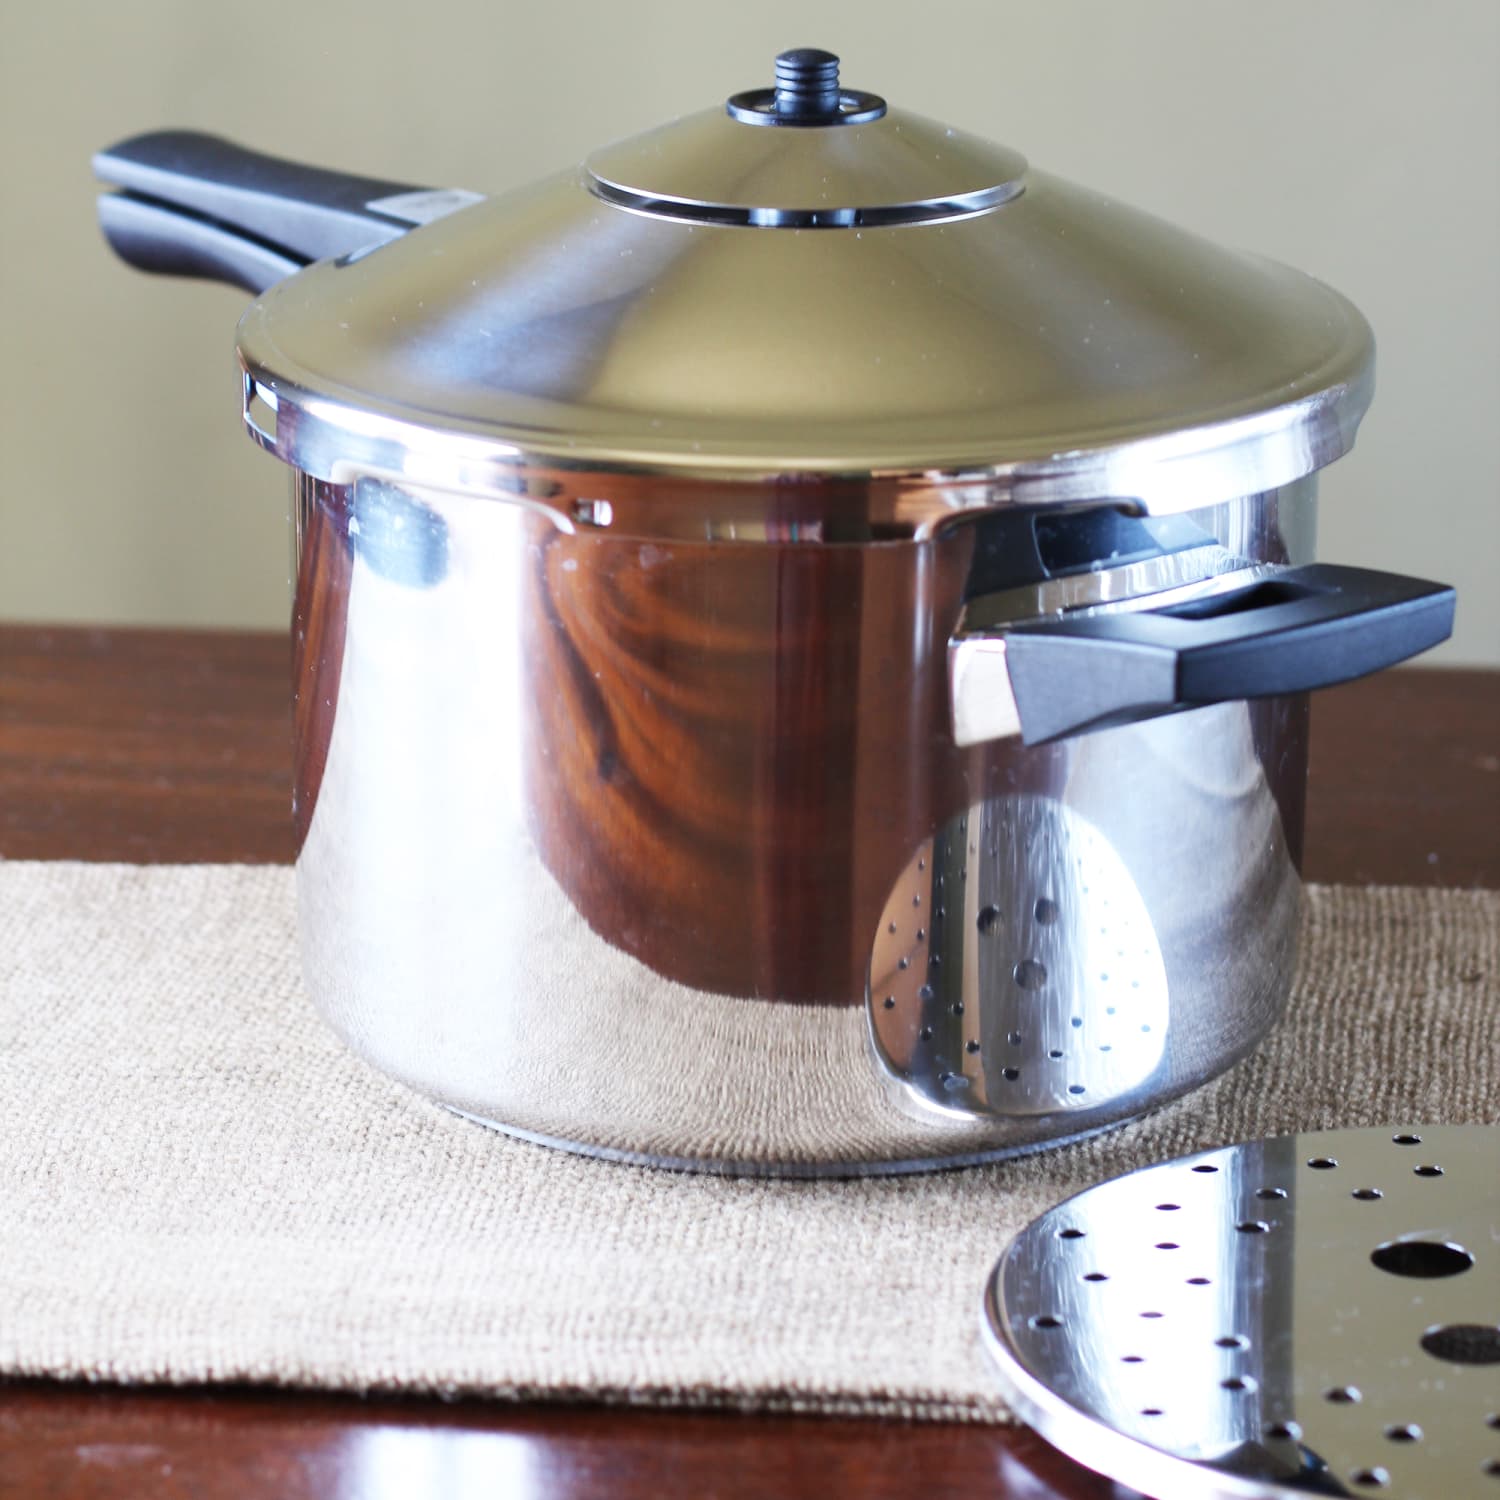 Kuhn Rikon Duromatic Stainless-Steel Saucepan Pressure Cooker